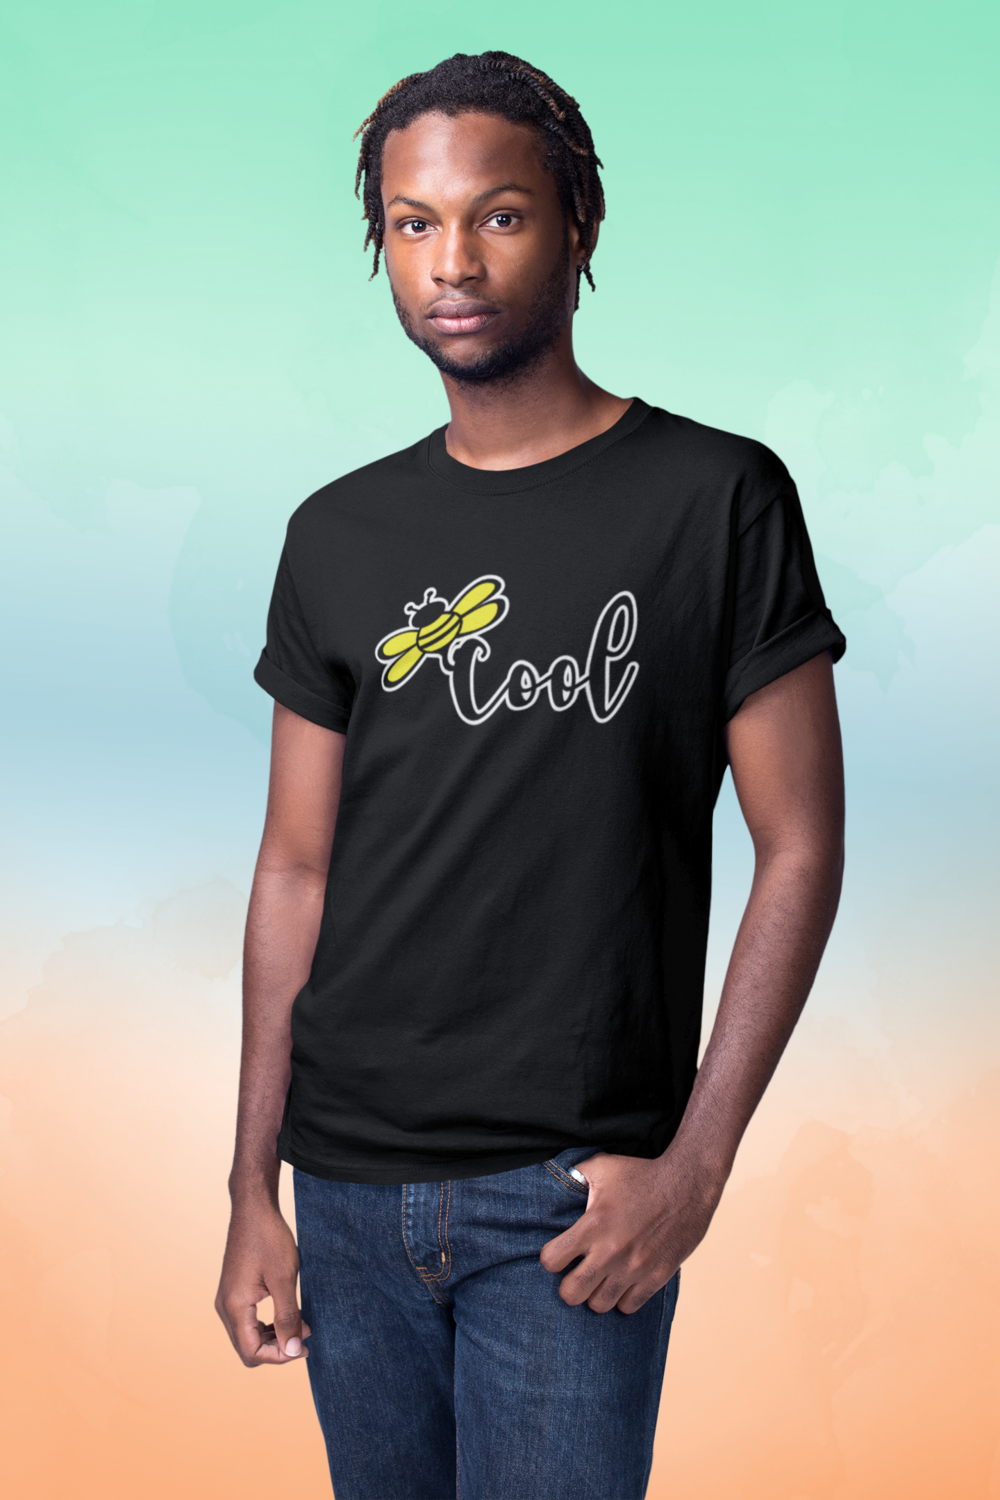 The Bee Series: "Bee Cool" Short-Sleeve Unisex Black T-Shirt